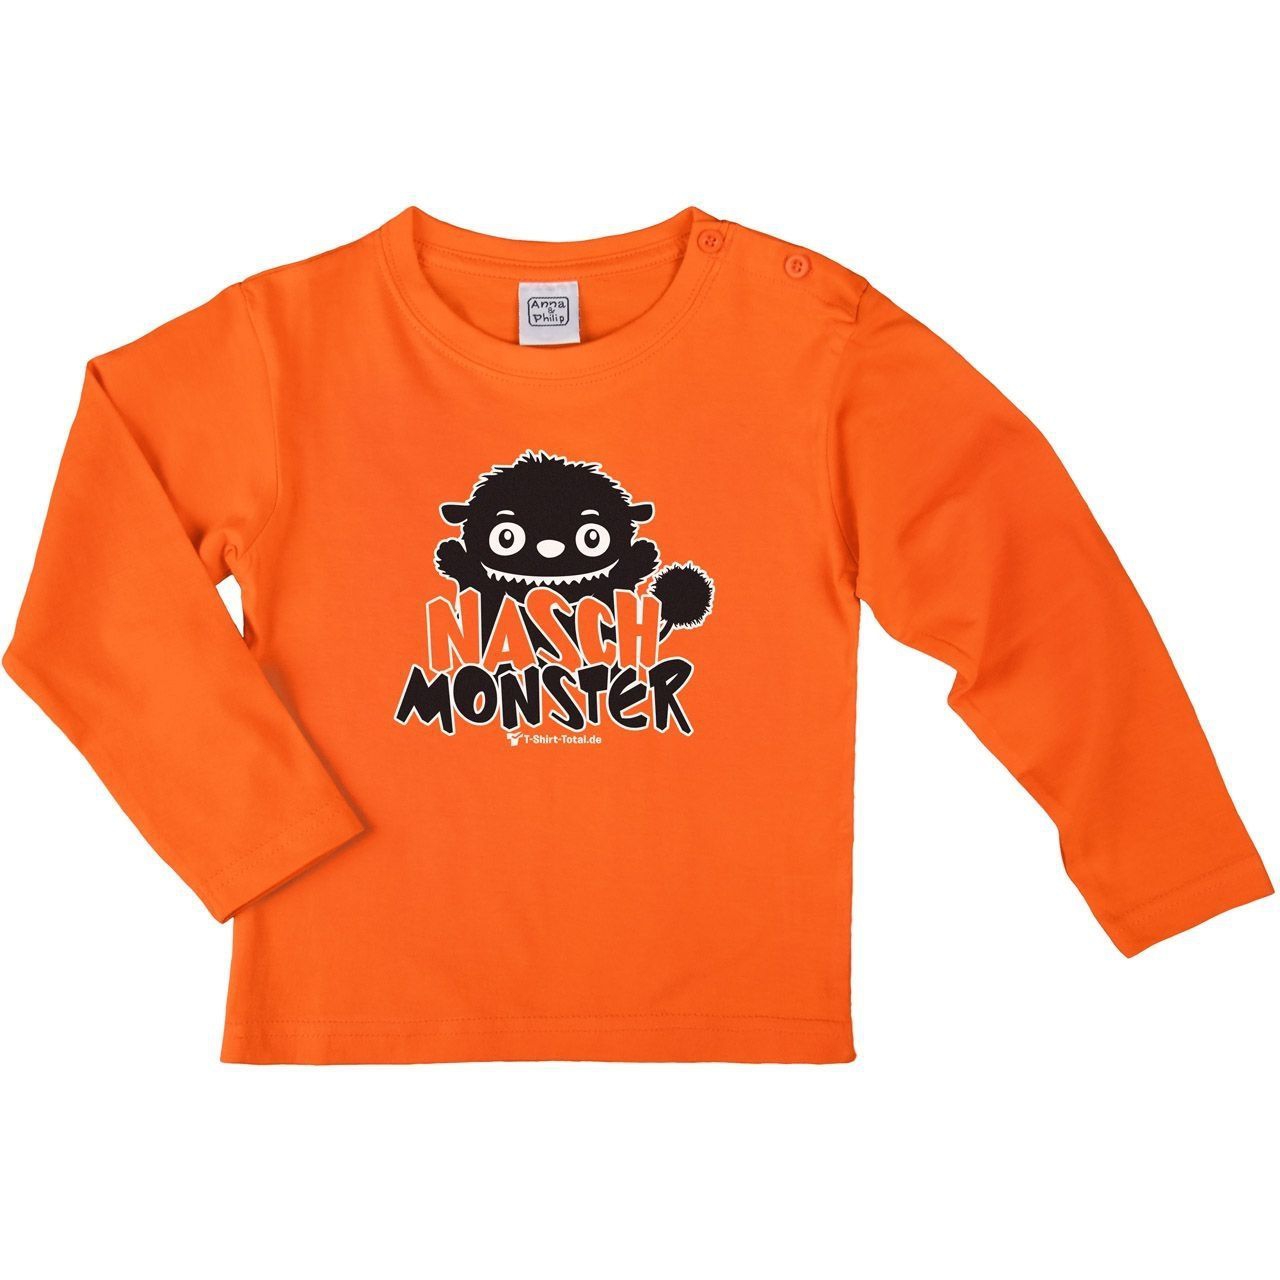 Naschmonster Kinder Langarm Shirt orange 104